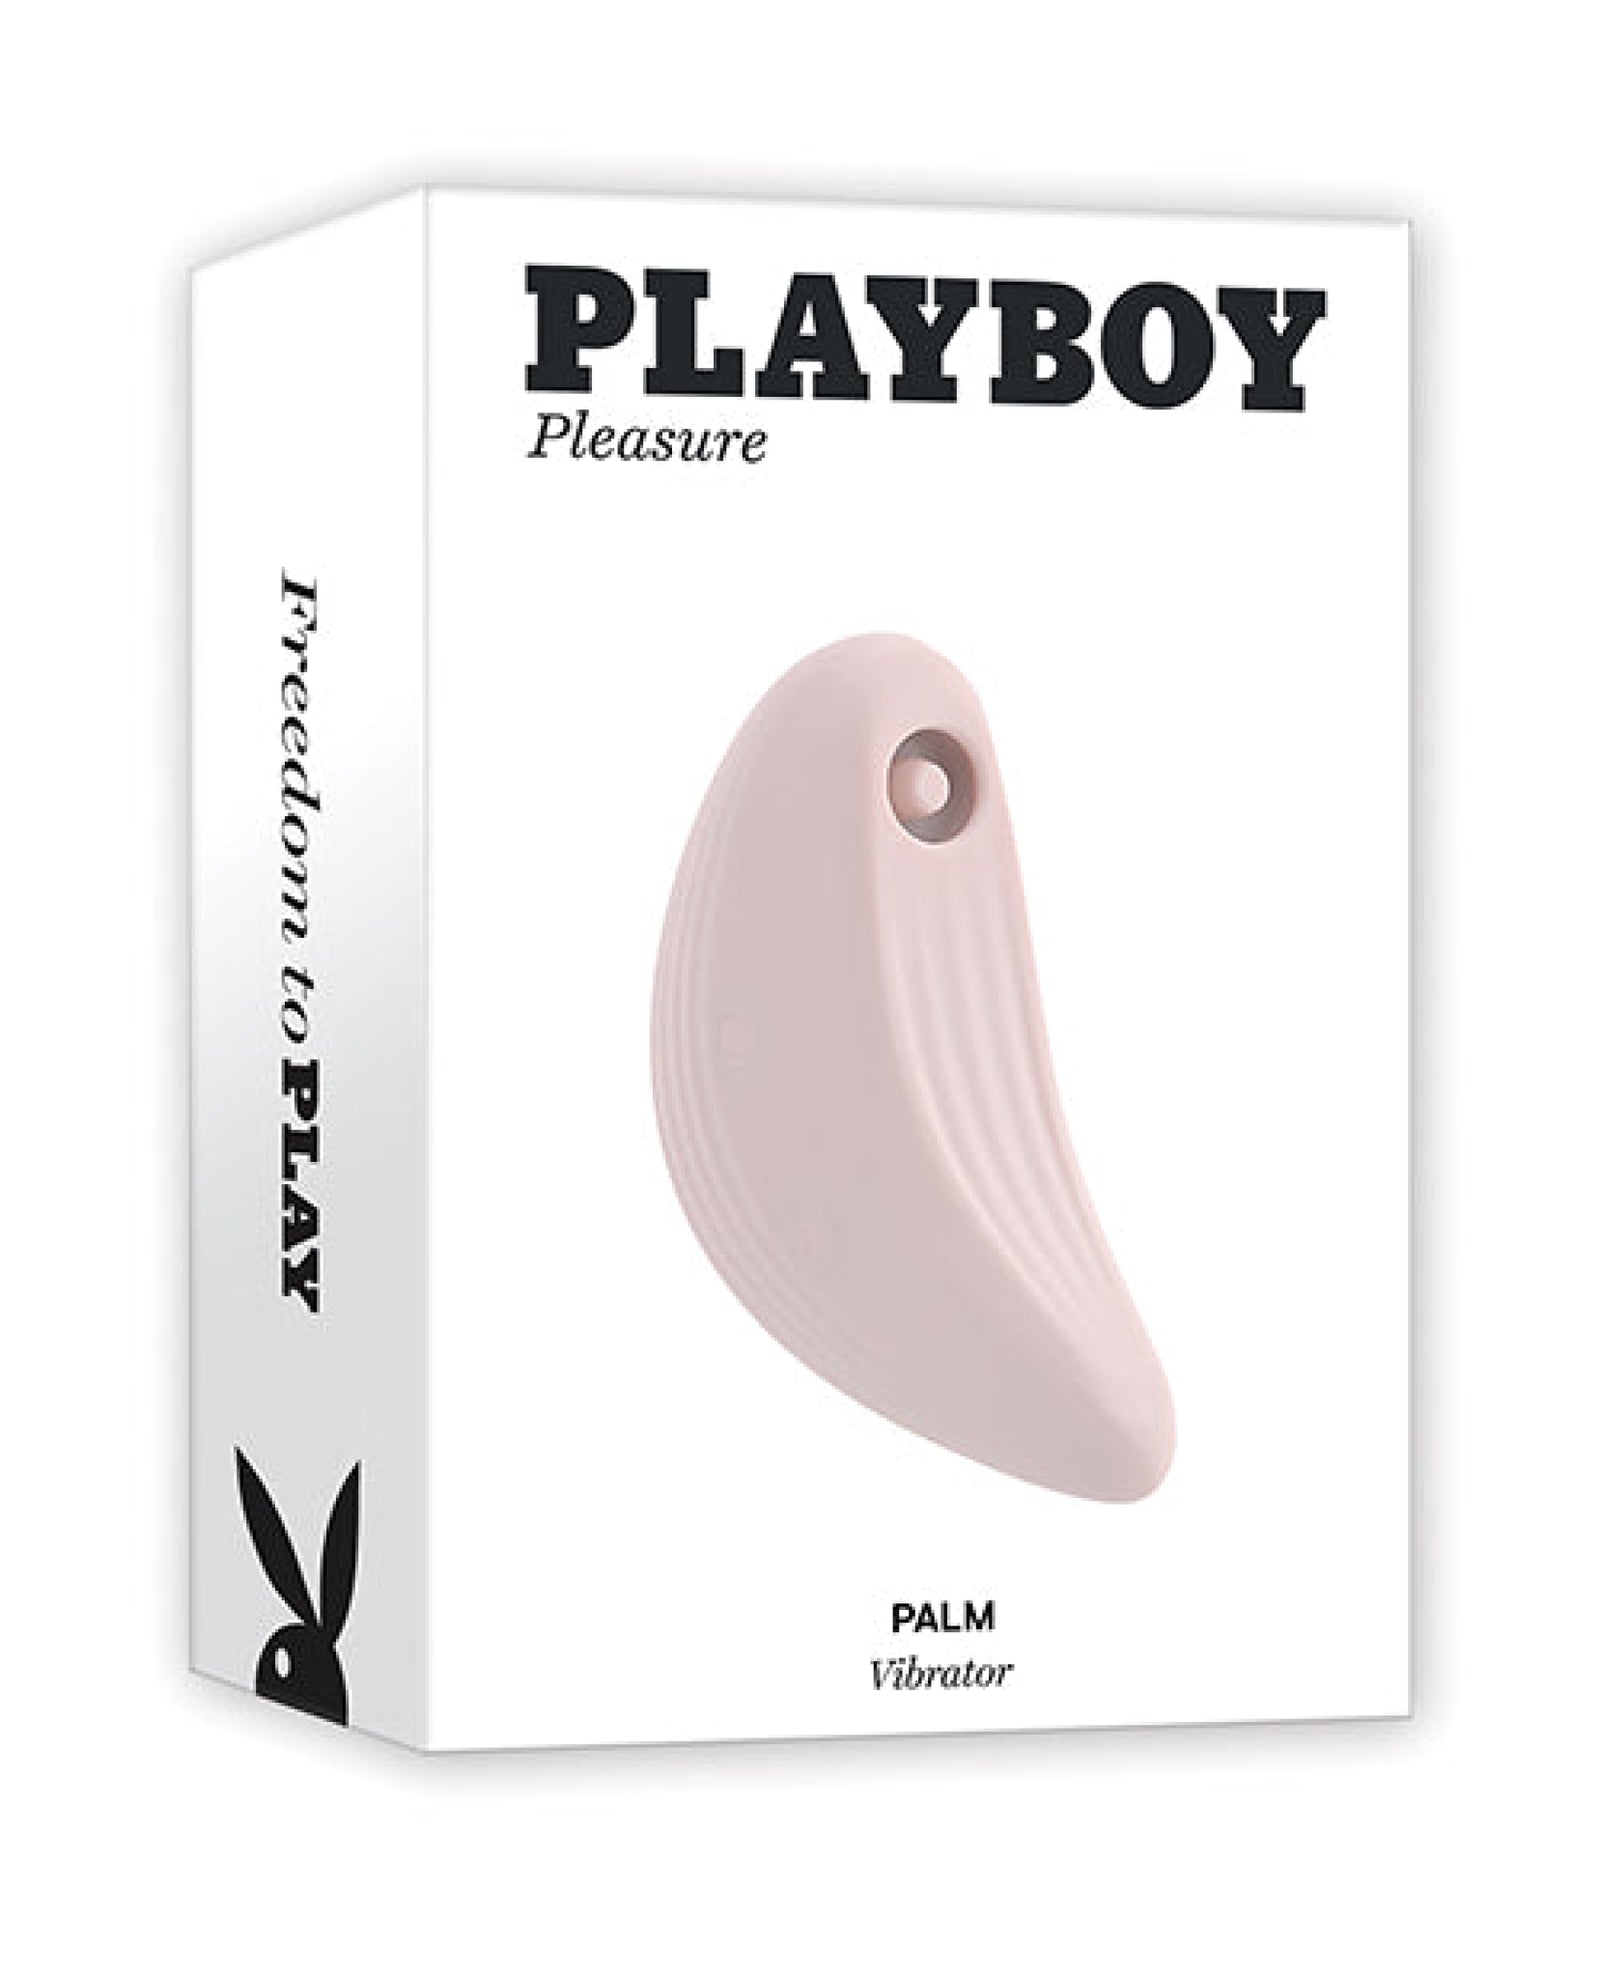 Playboy Pleasure Palm Vibrator - Solo Playboy